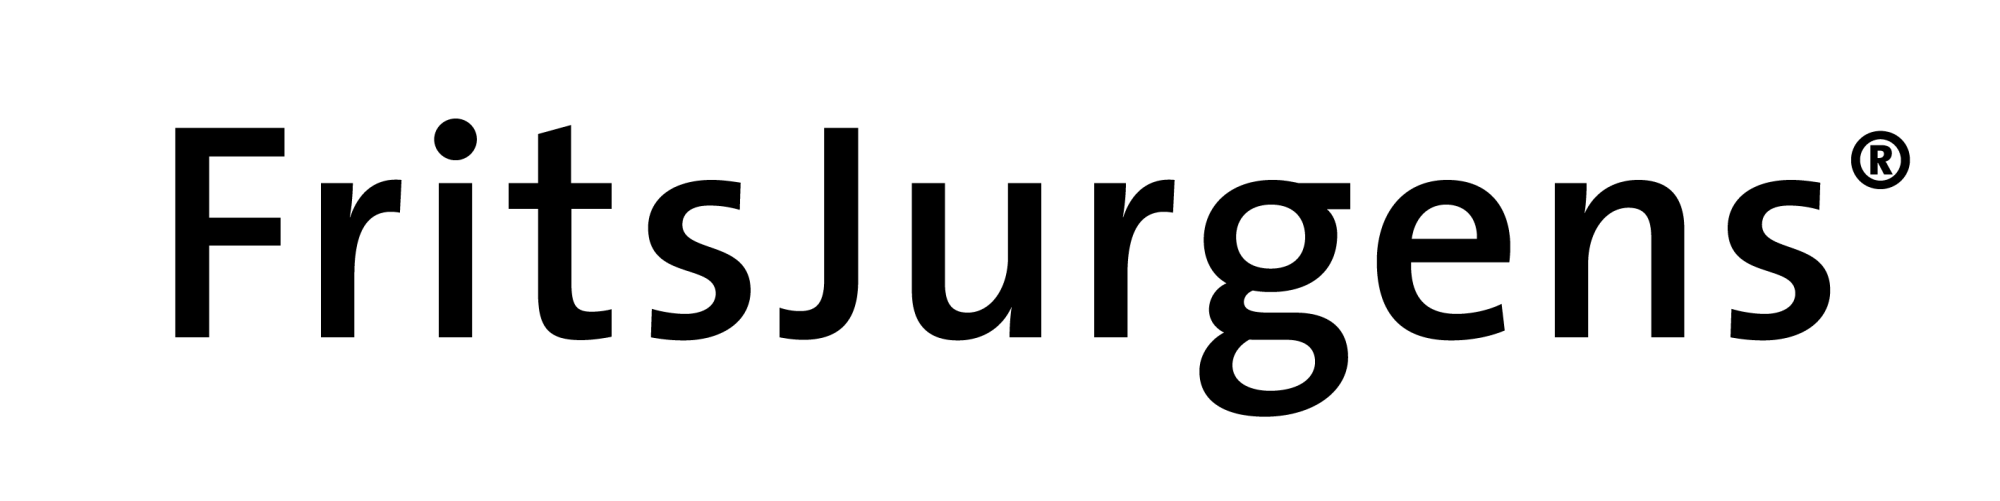 FritsJurgens-logo-black.png